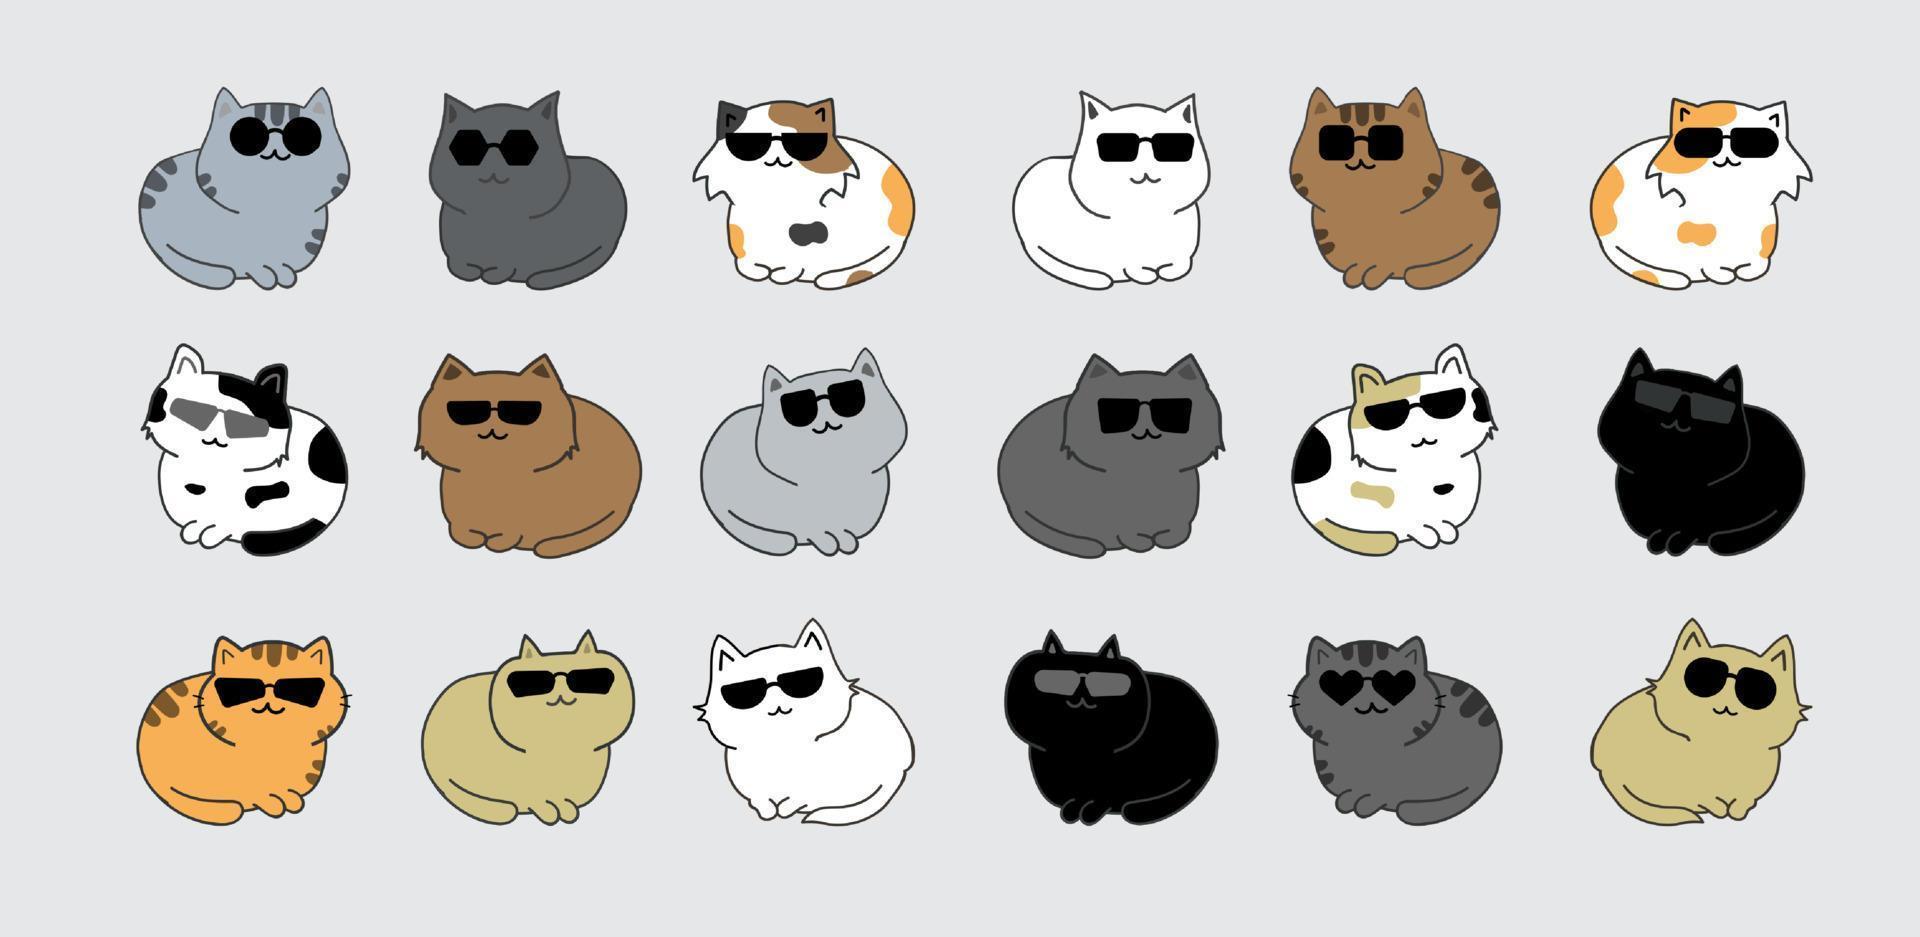 Cat with sunglasses cartoon character set vector